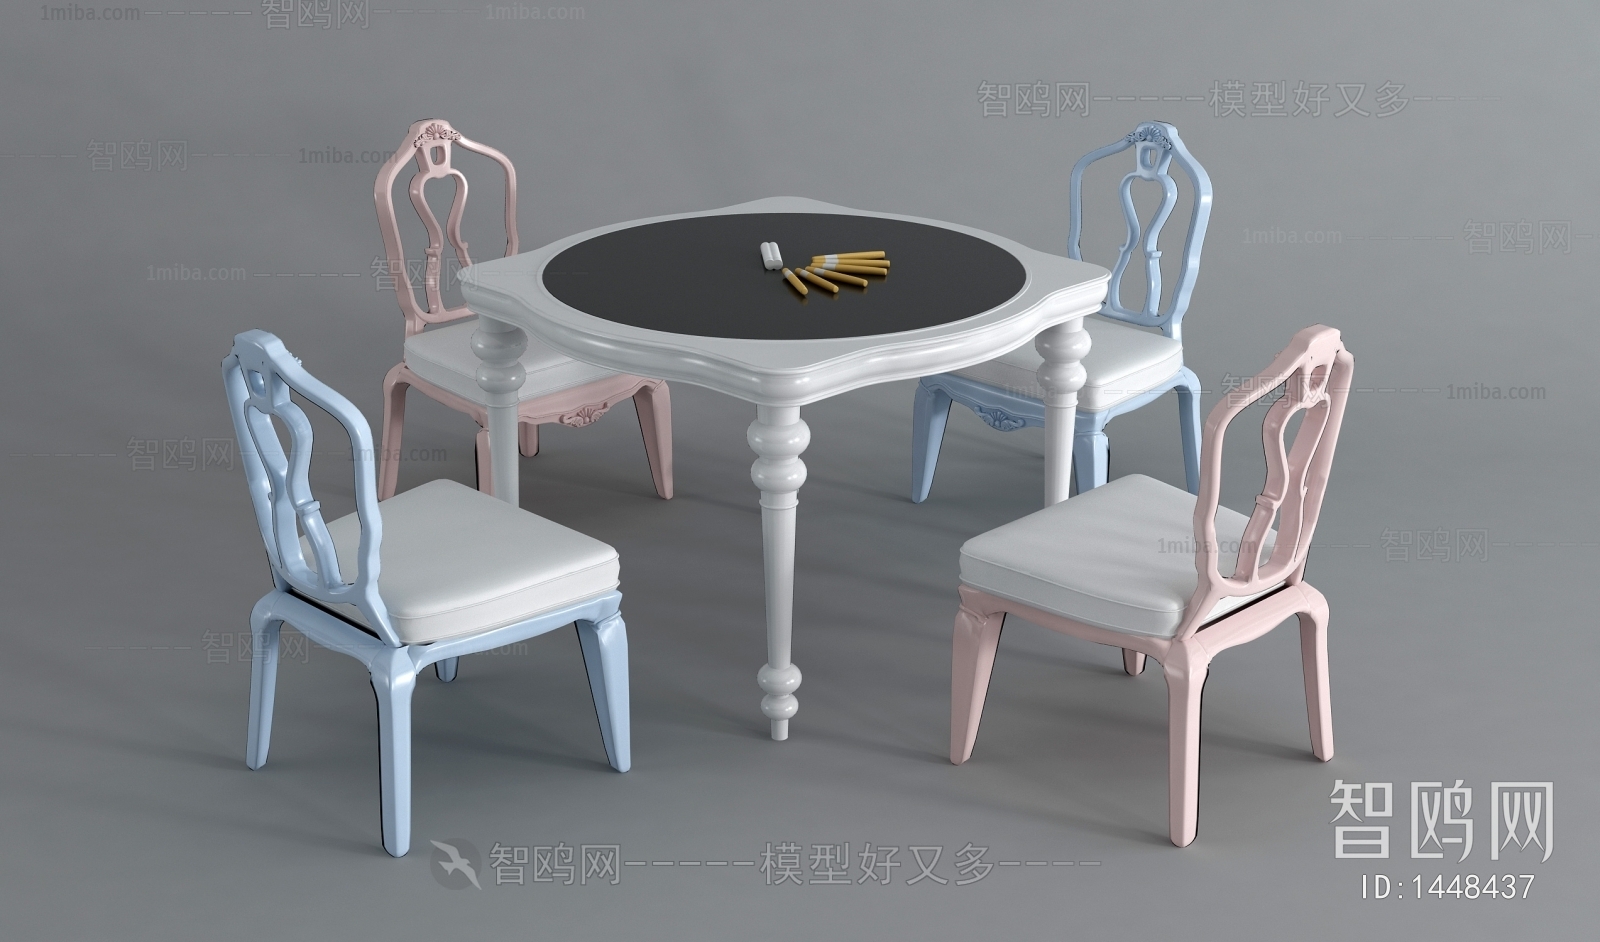 Simple European Style Children's Table/chair